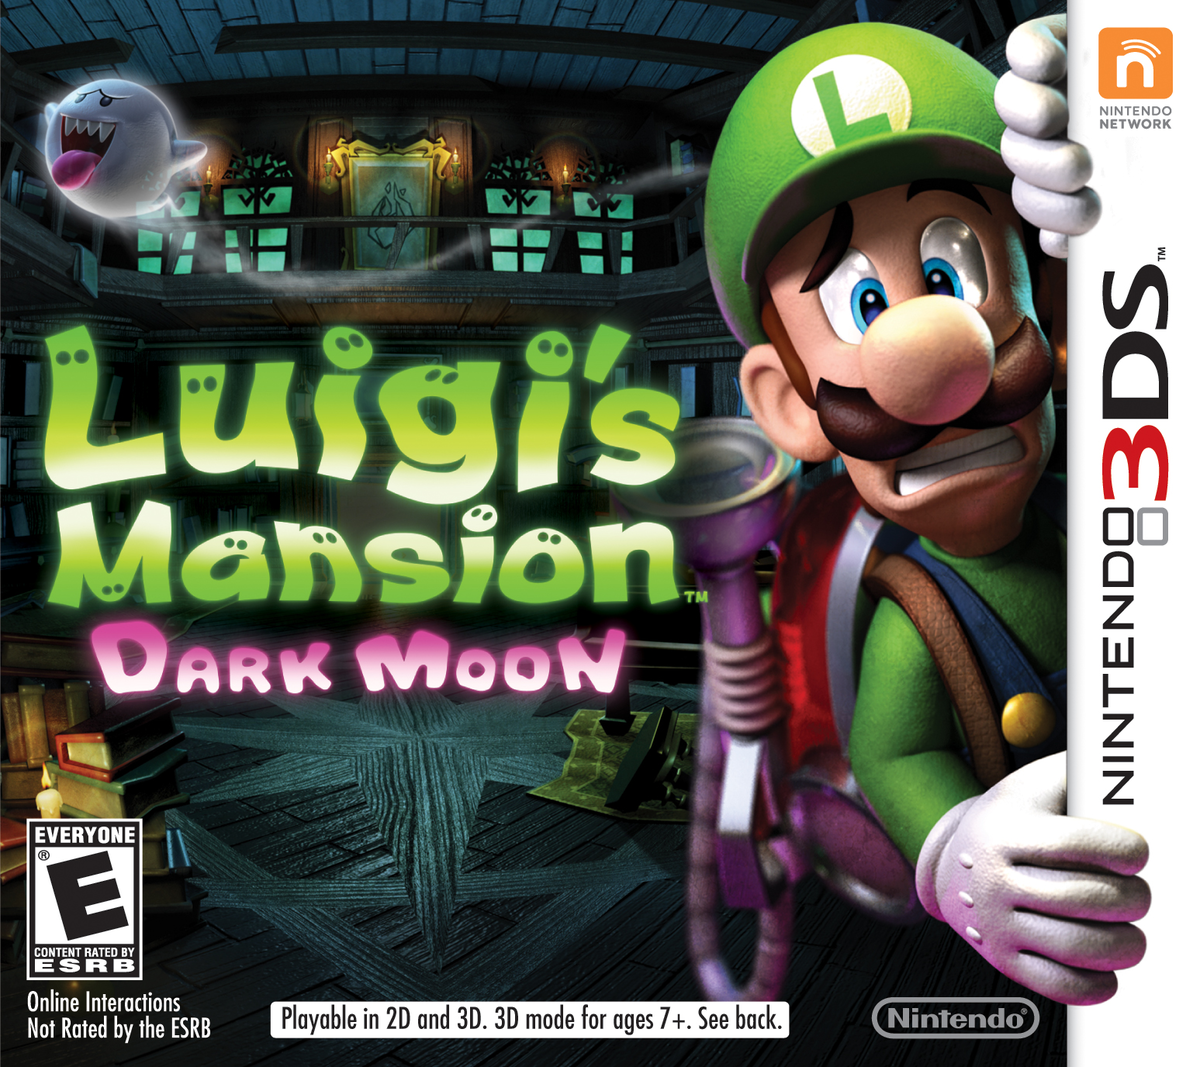 luigi-s-mansion-dark-moon-strategywiki-the-video-game-walkthrough-and-strategy-guide-wiki